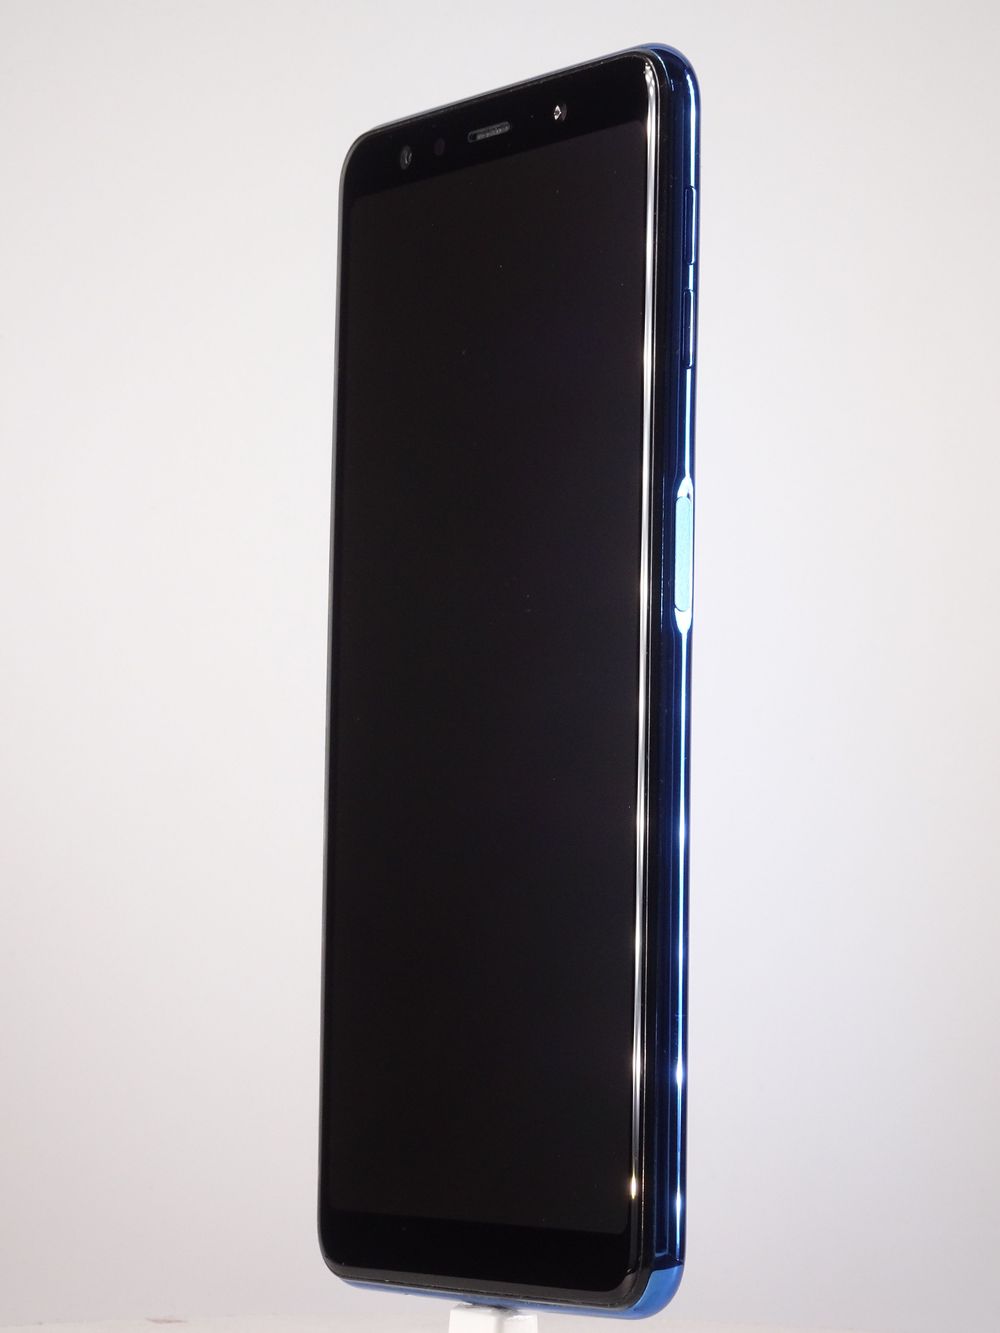 Mobiltelefon Samsung Galaxy A7 (2018) Dual Sim, Blue, 64 GB, Bun